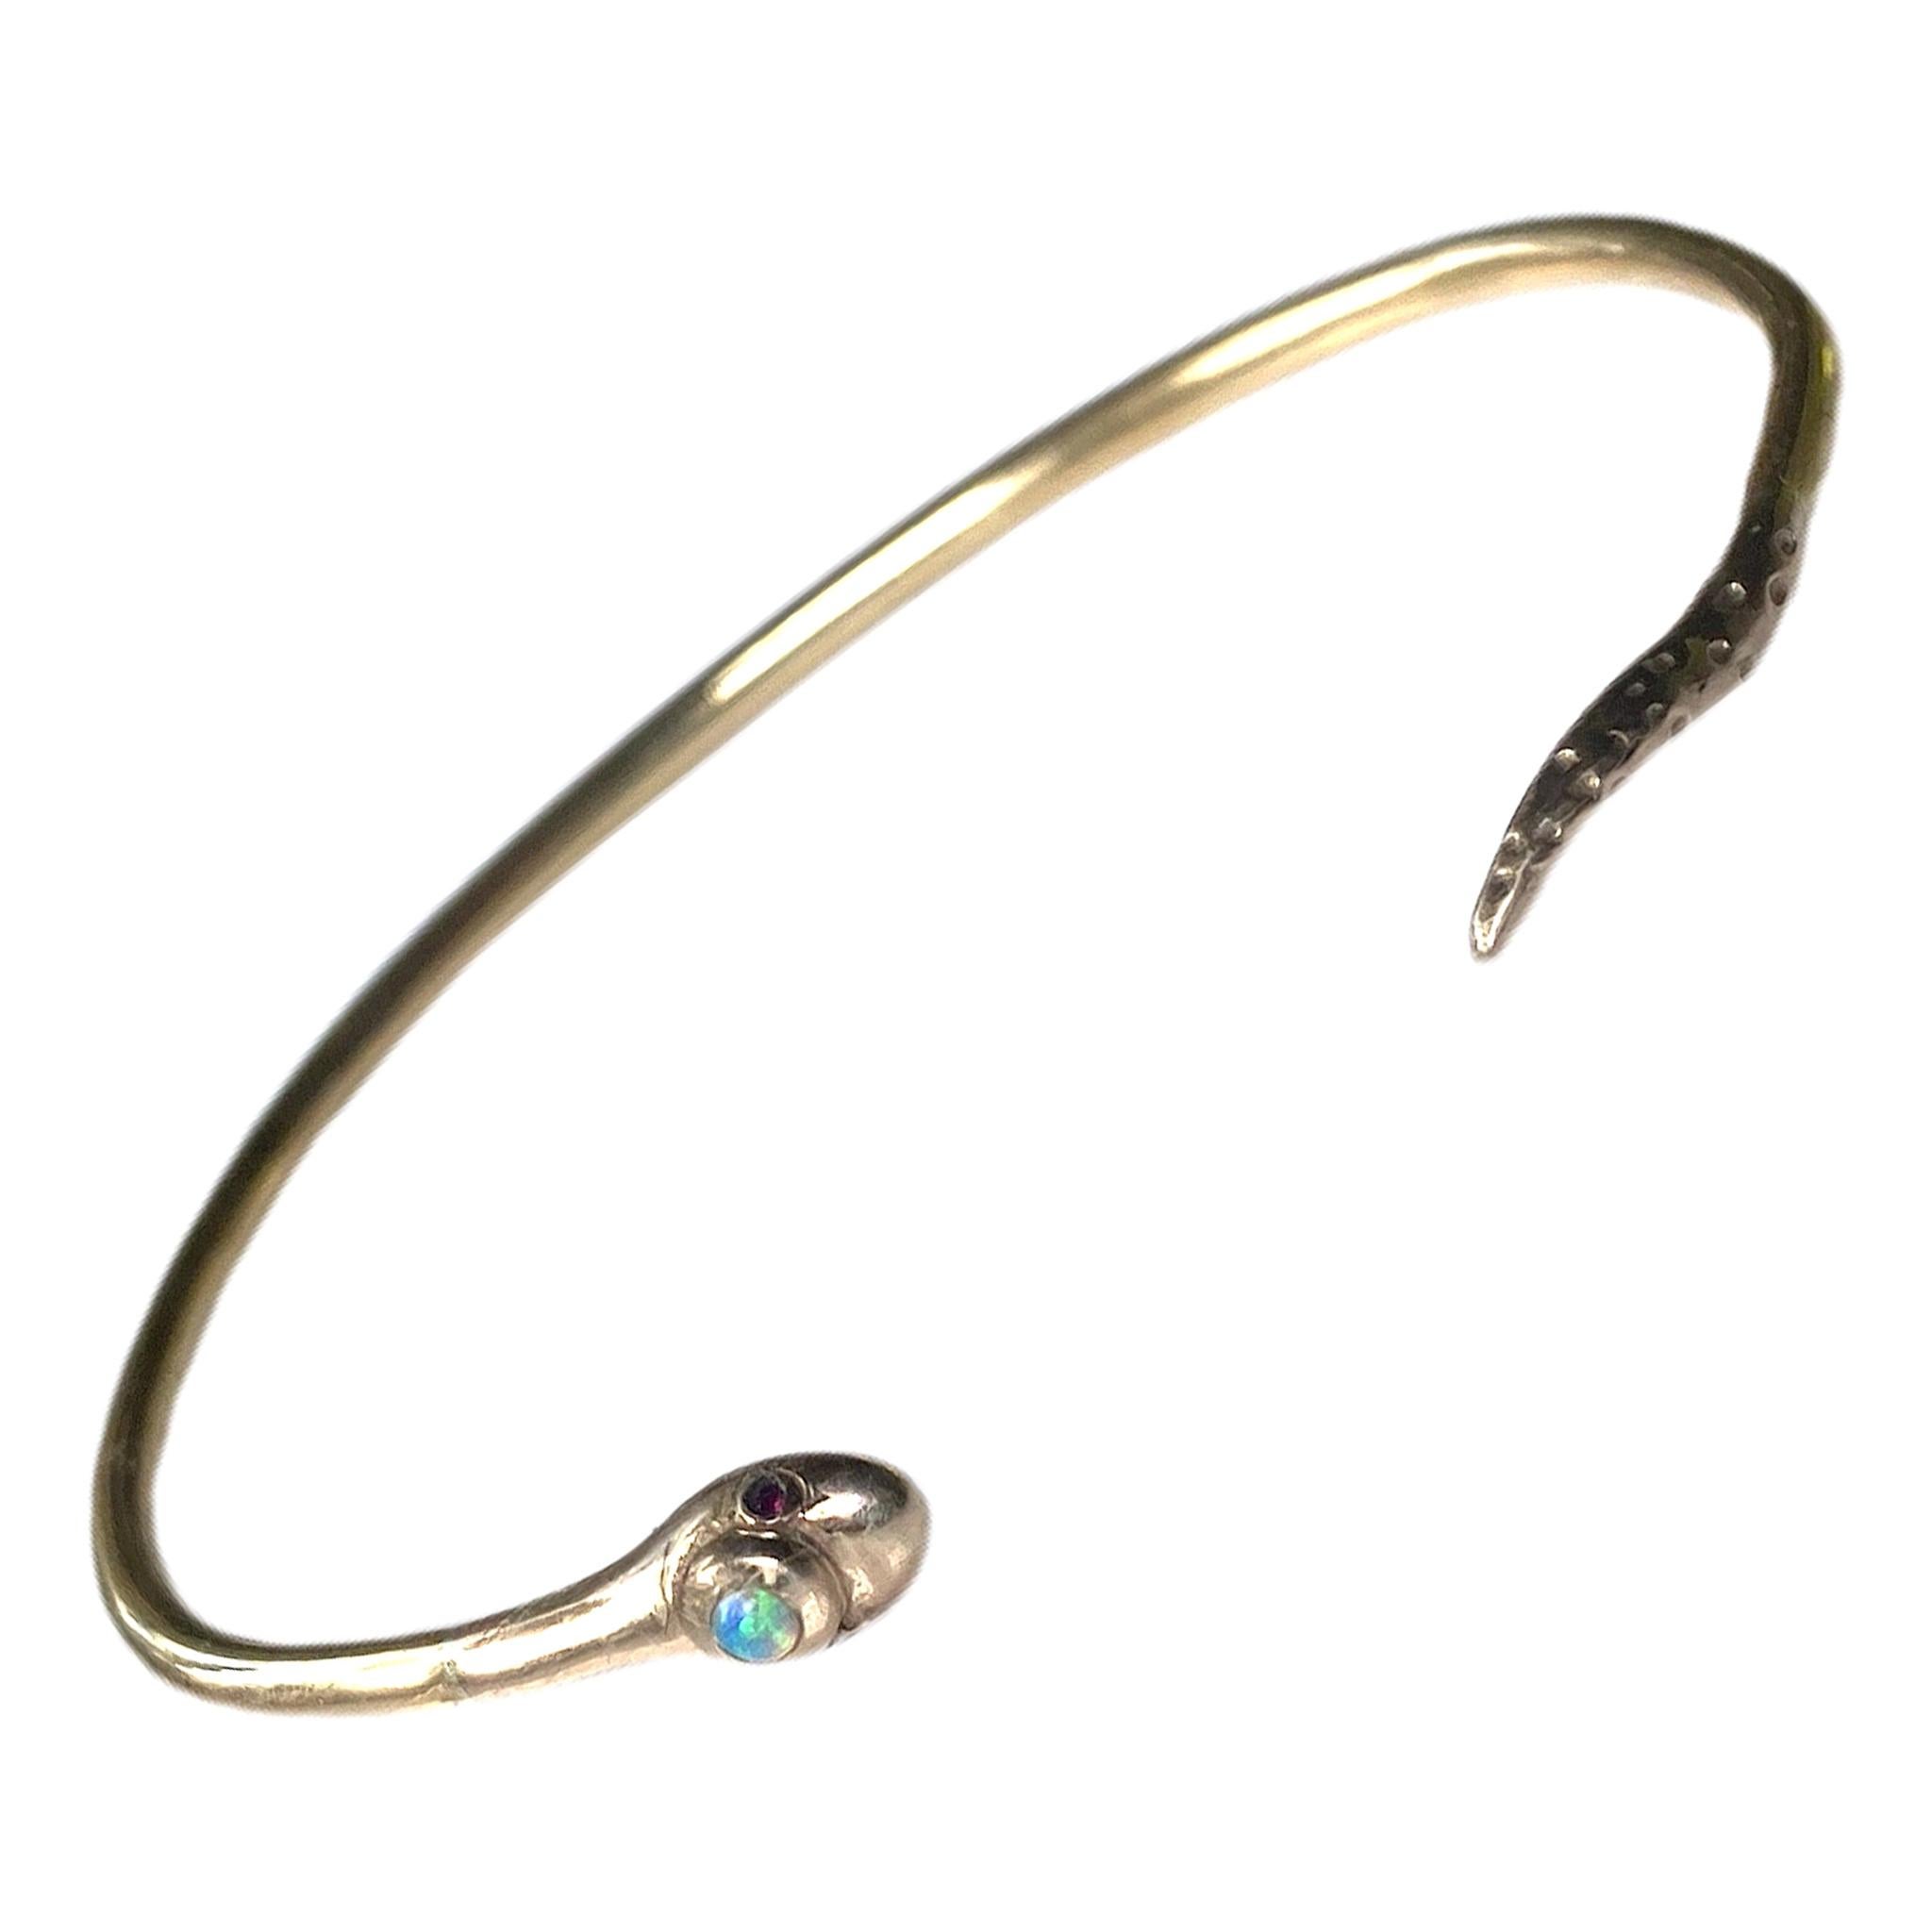 Vintage Italian 18k Gold Snake Arm Cuff Bracelet